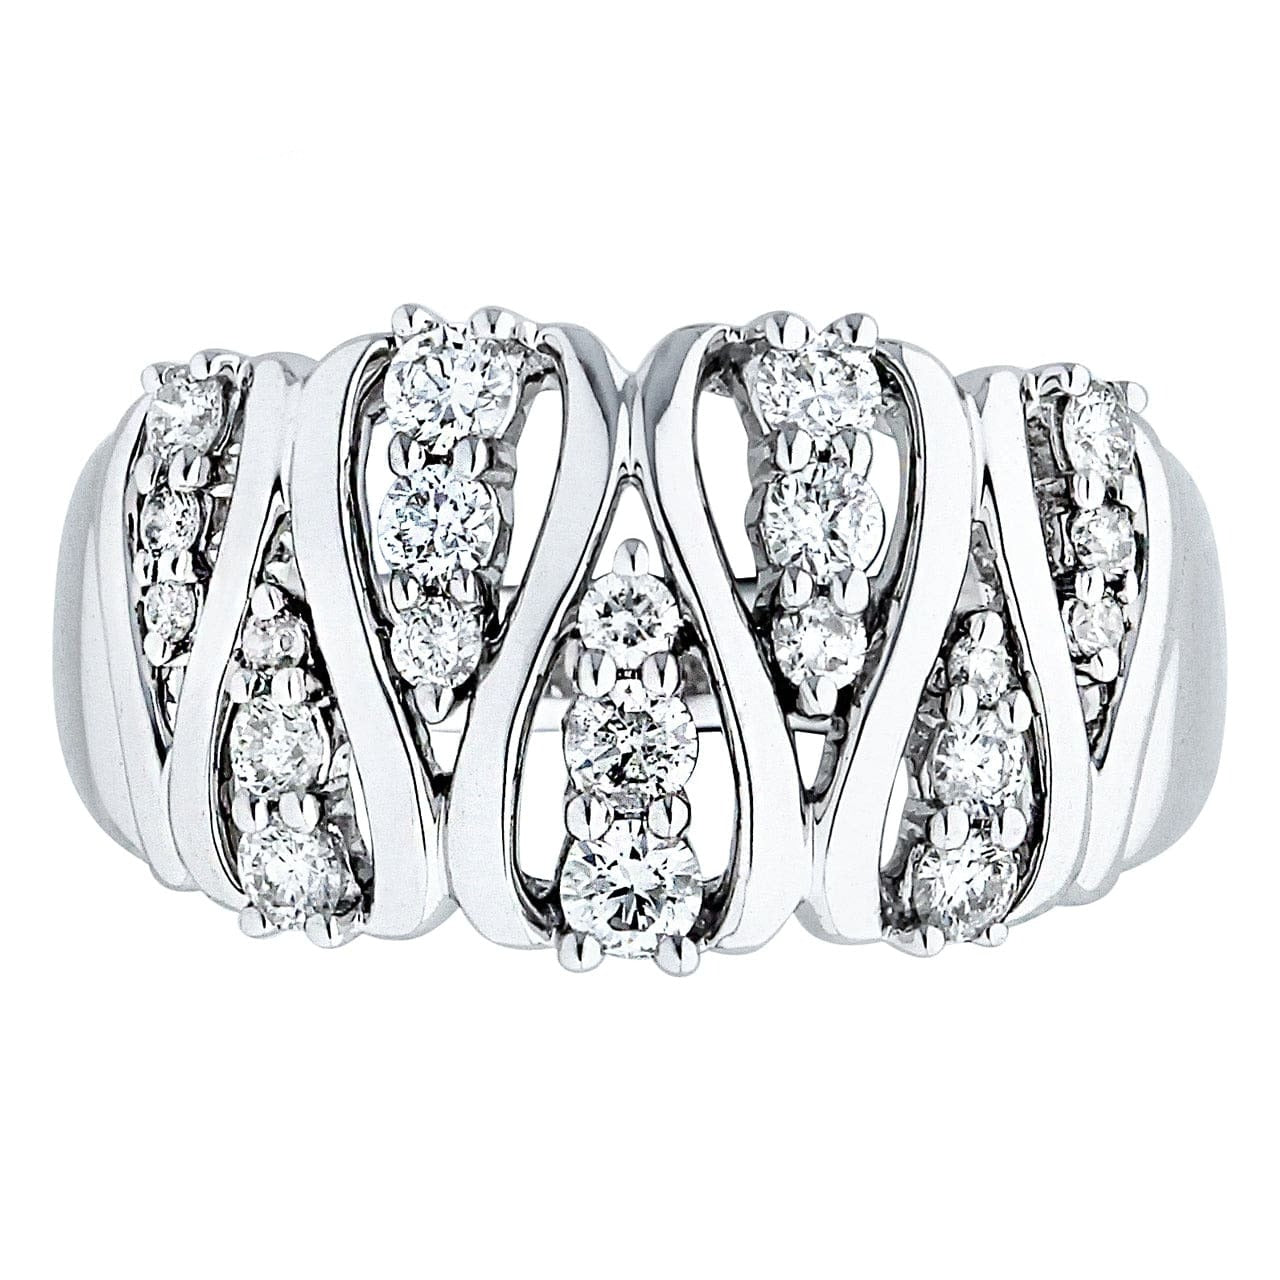 Gorgeous Wedding 18K 750 Real White Gold Genuine Diamond Band Ring